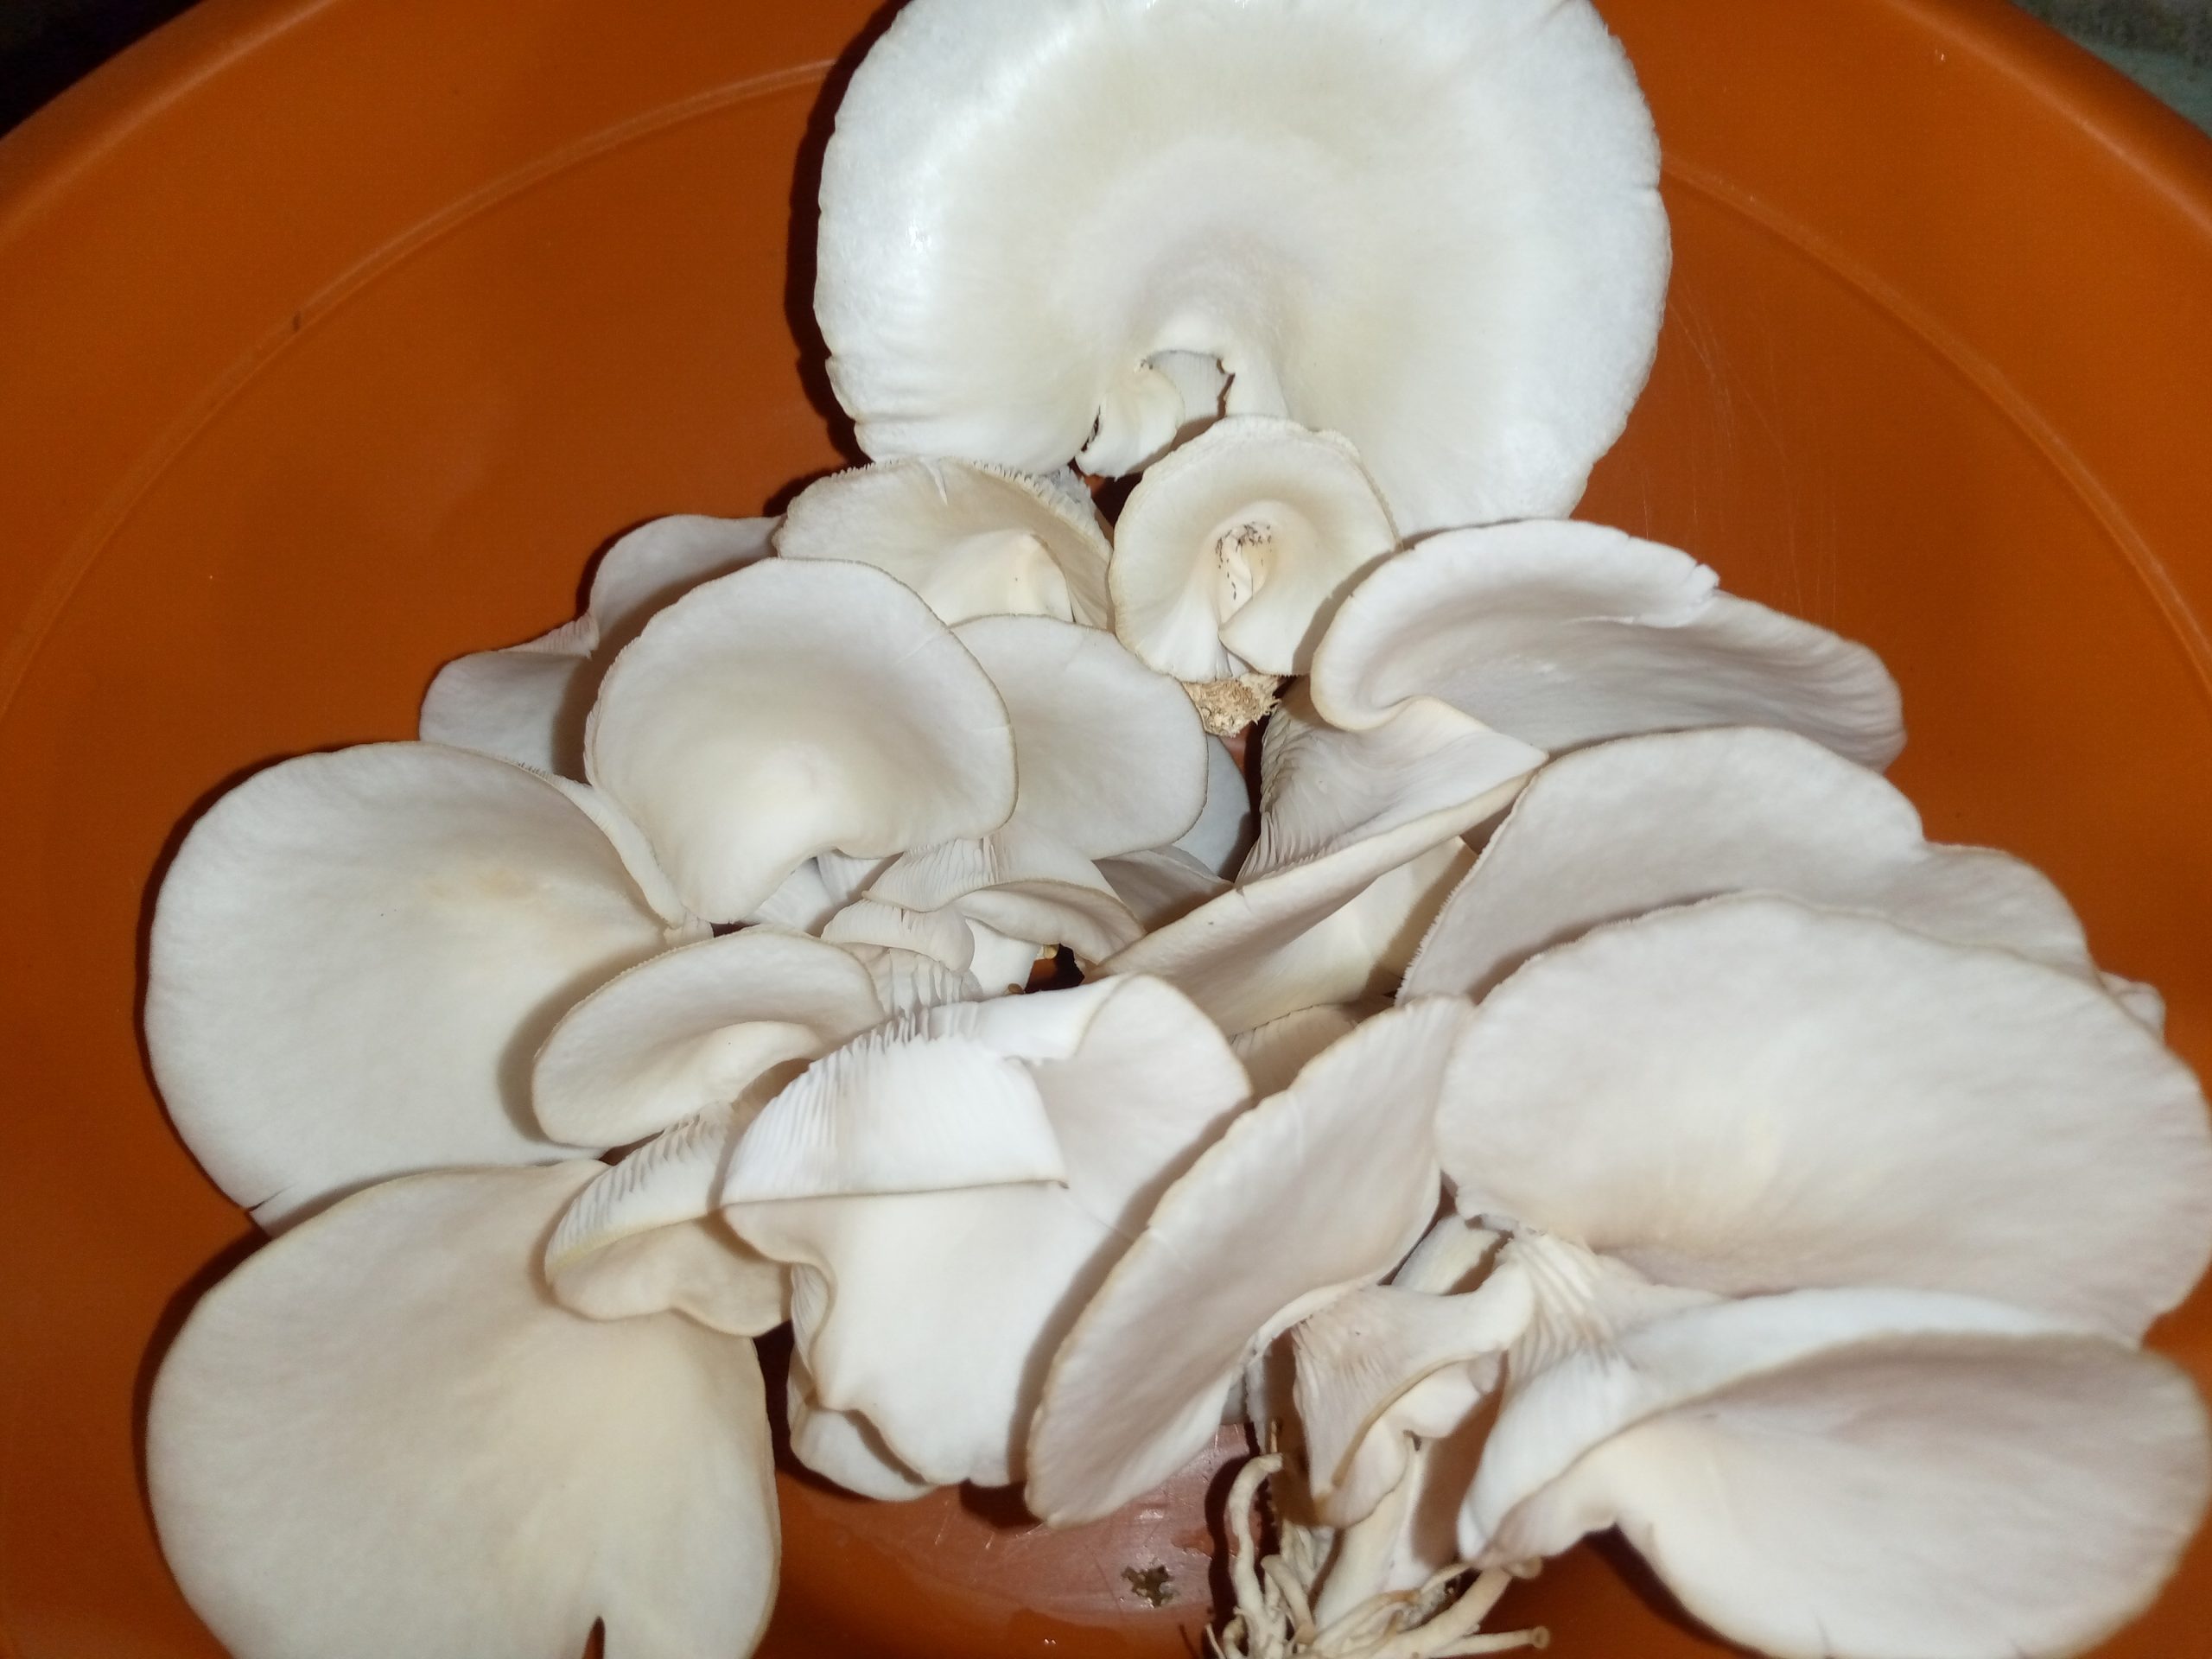 The raw materials for mushroom farming business